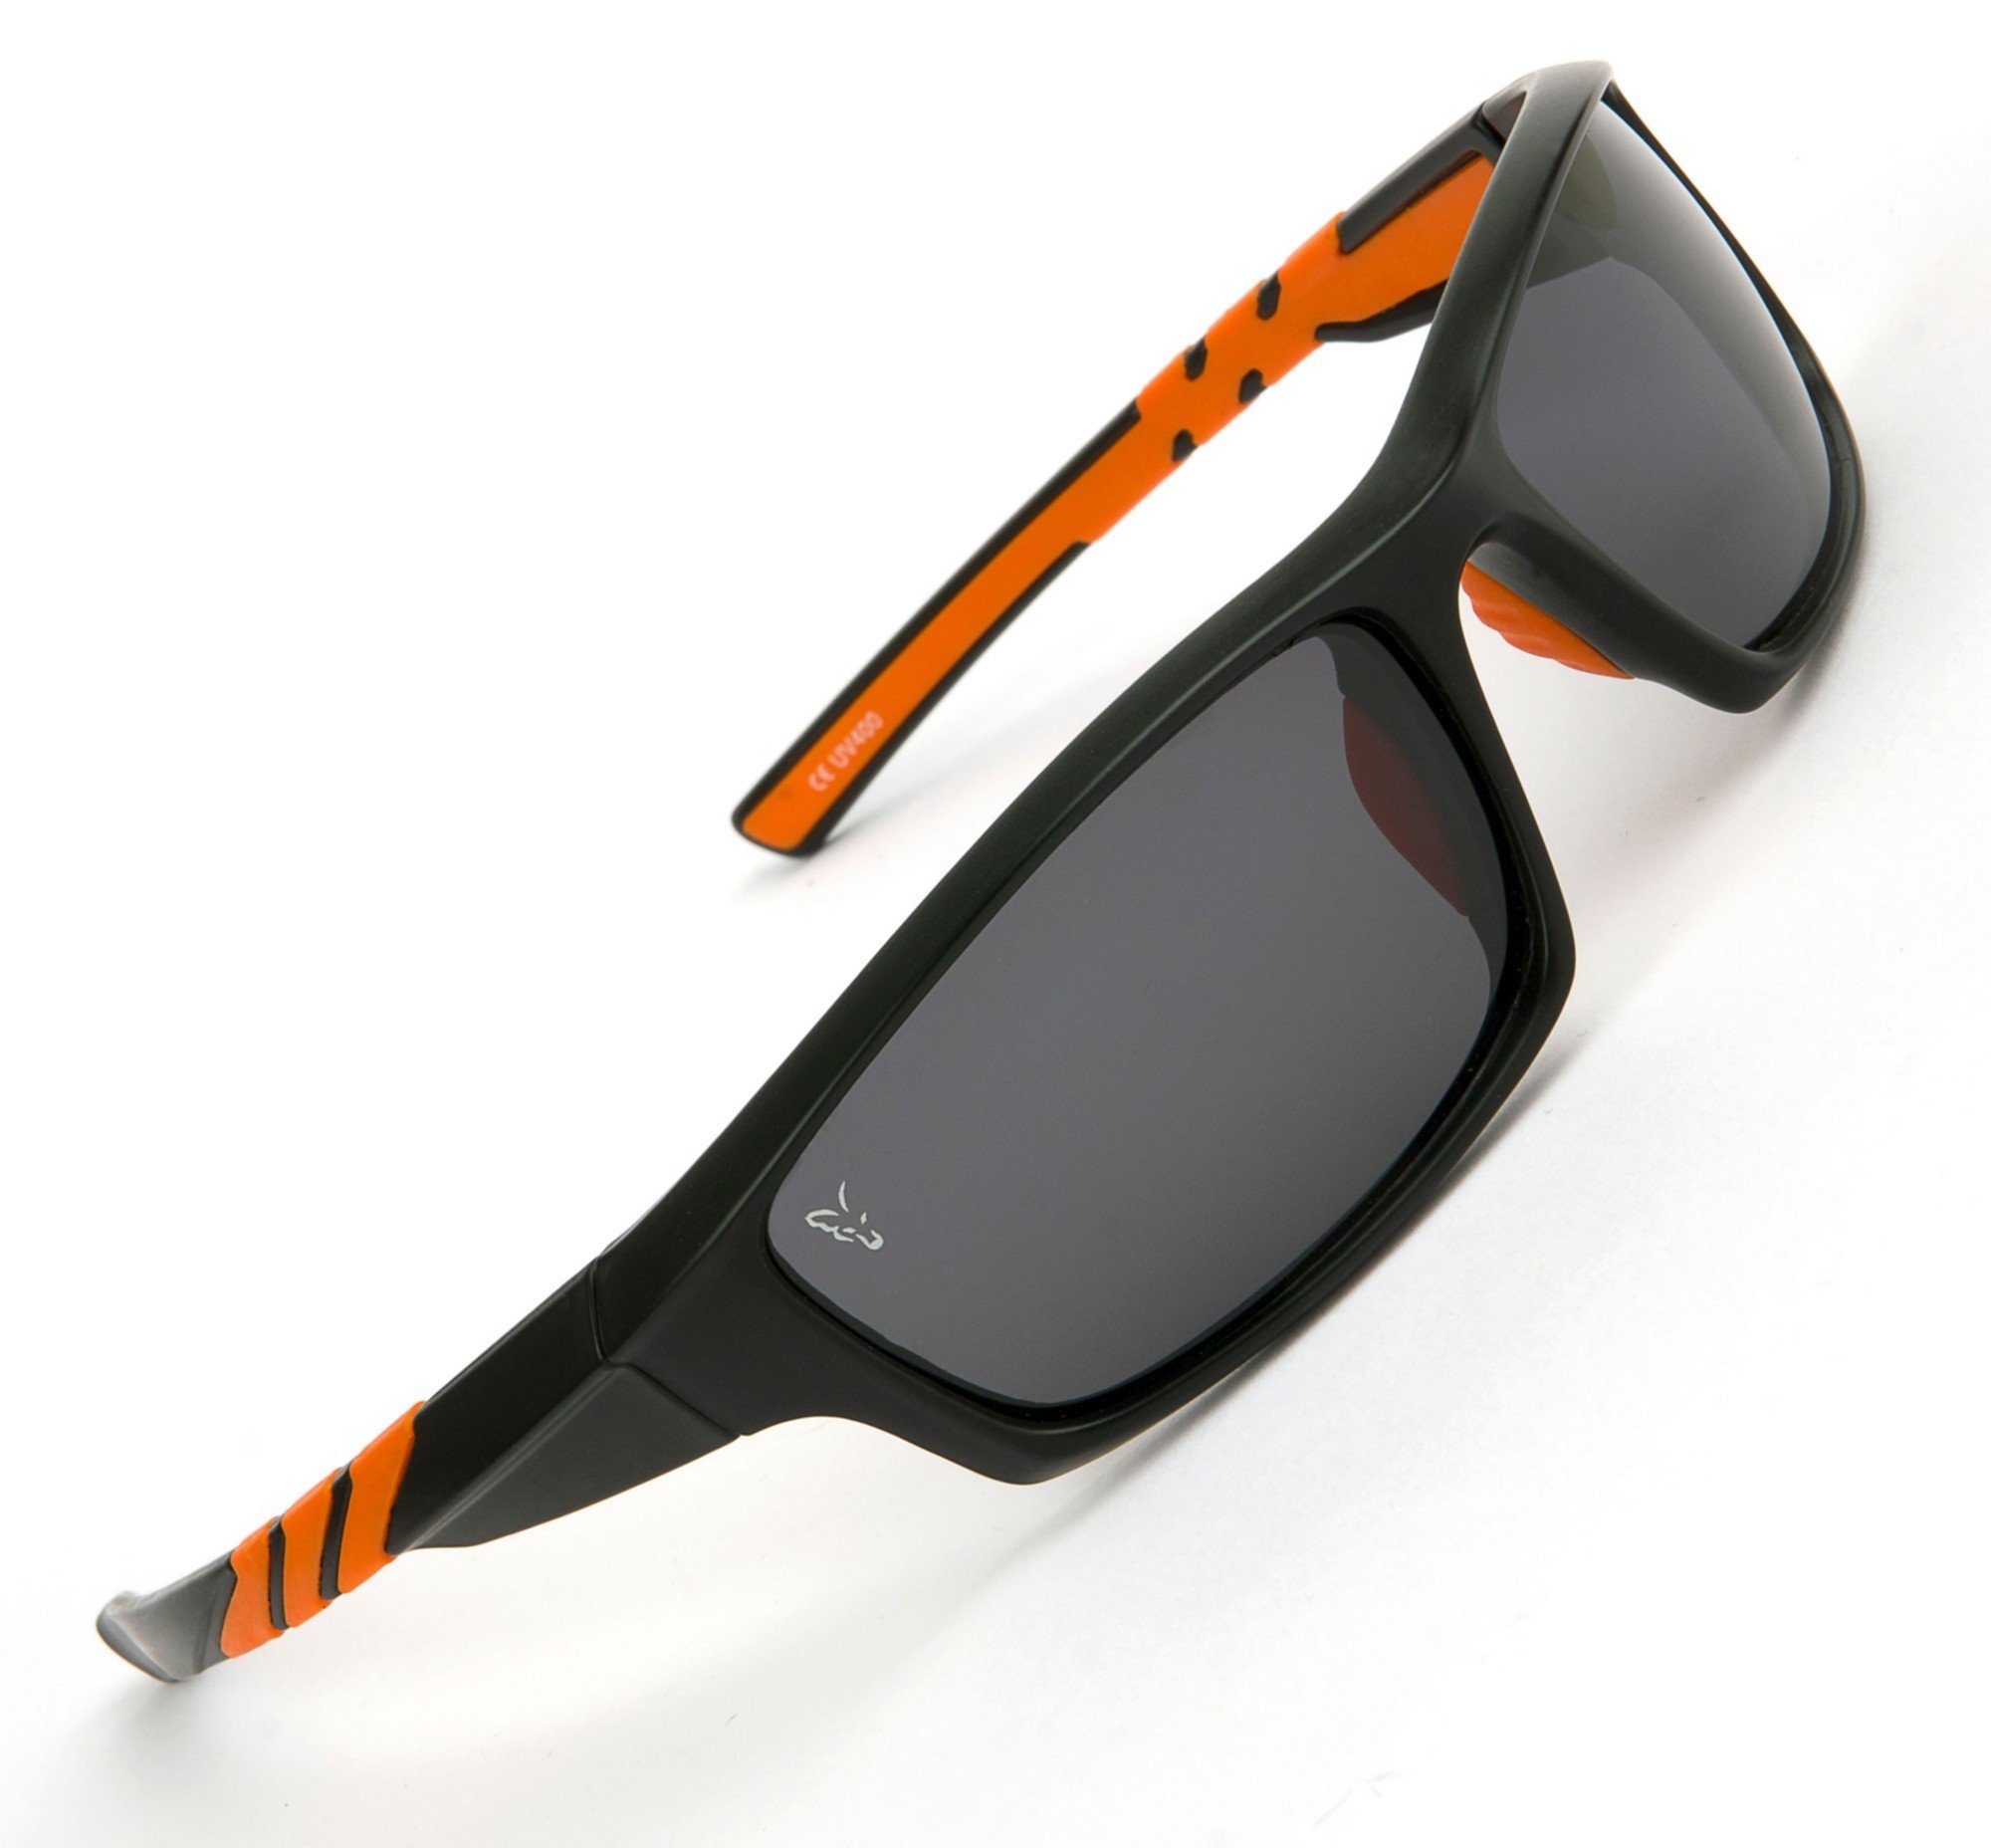 Fox Sunglasses Black Orange wraps grey lense - Polbrille zum Waller & Karpfenangeln, Polarisationsbrille zum Angeln, Angelbrille